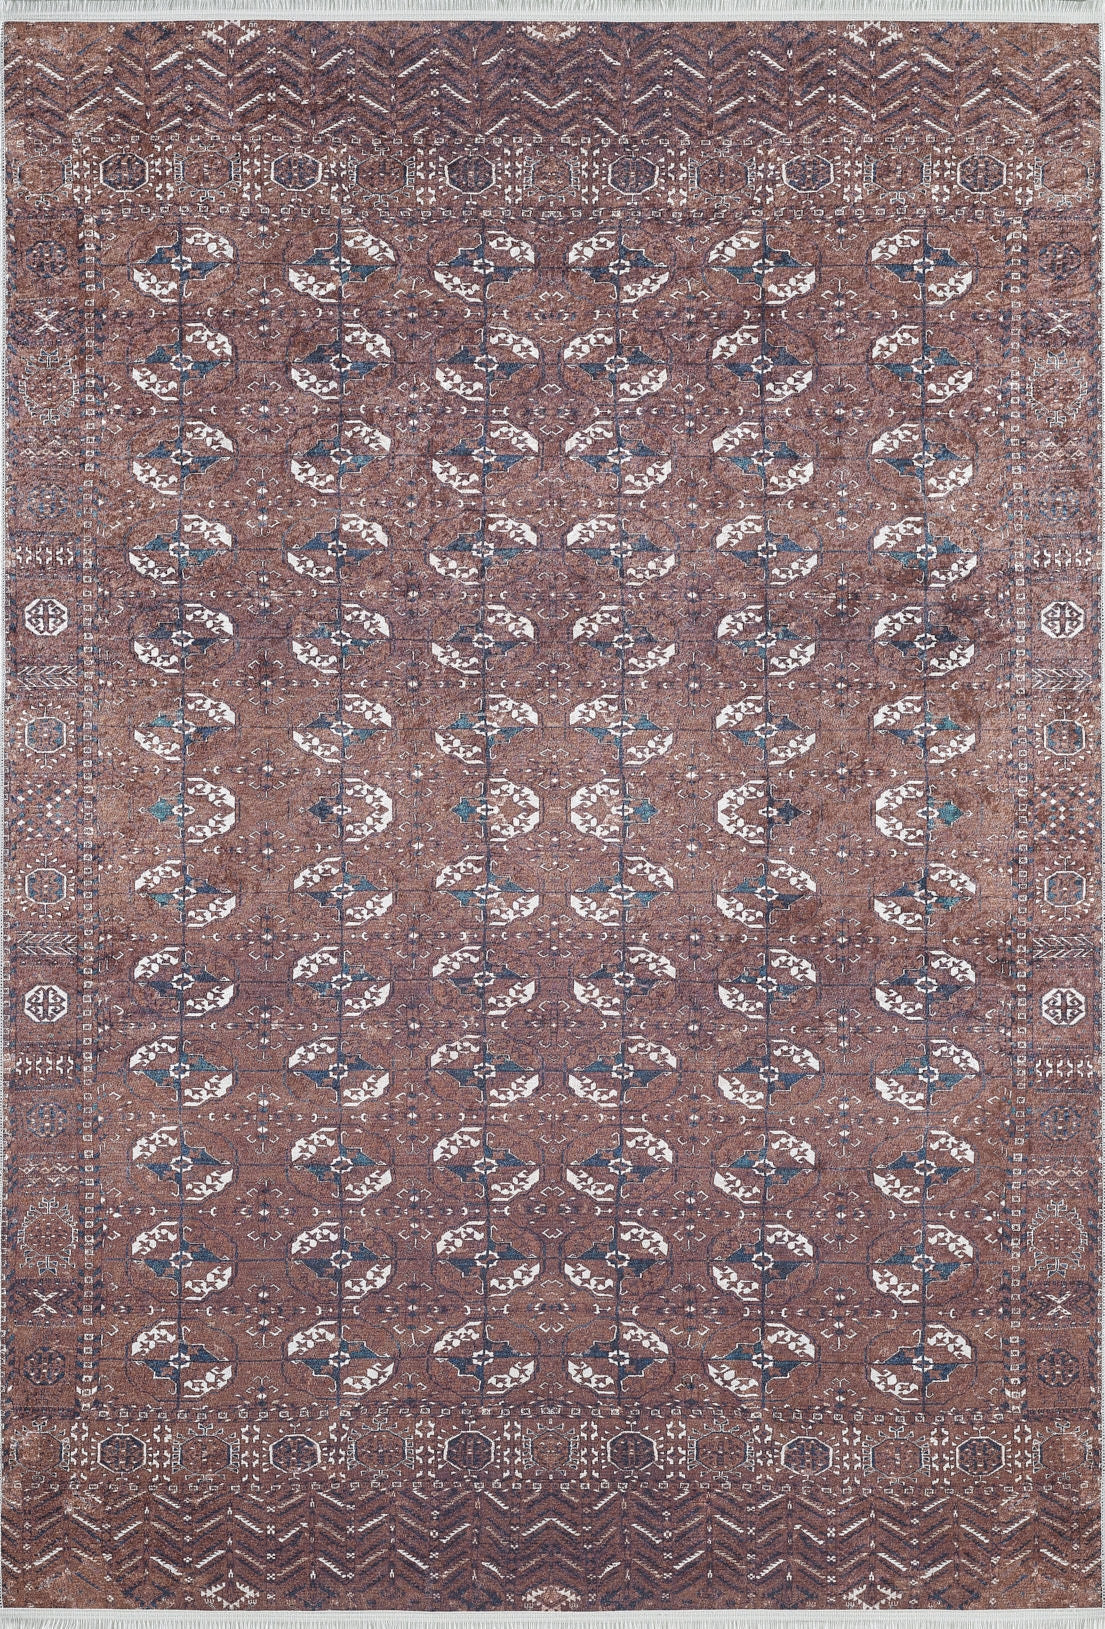 machine-washable-area-rug-Tribal-Ethnic-Collection-Bronze-Brown-JR1942